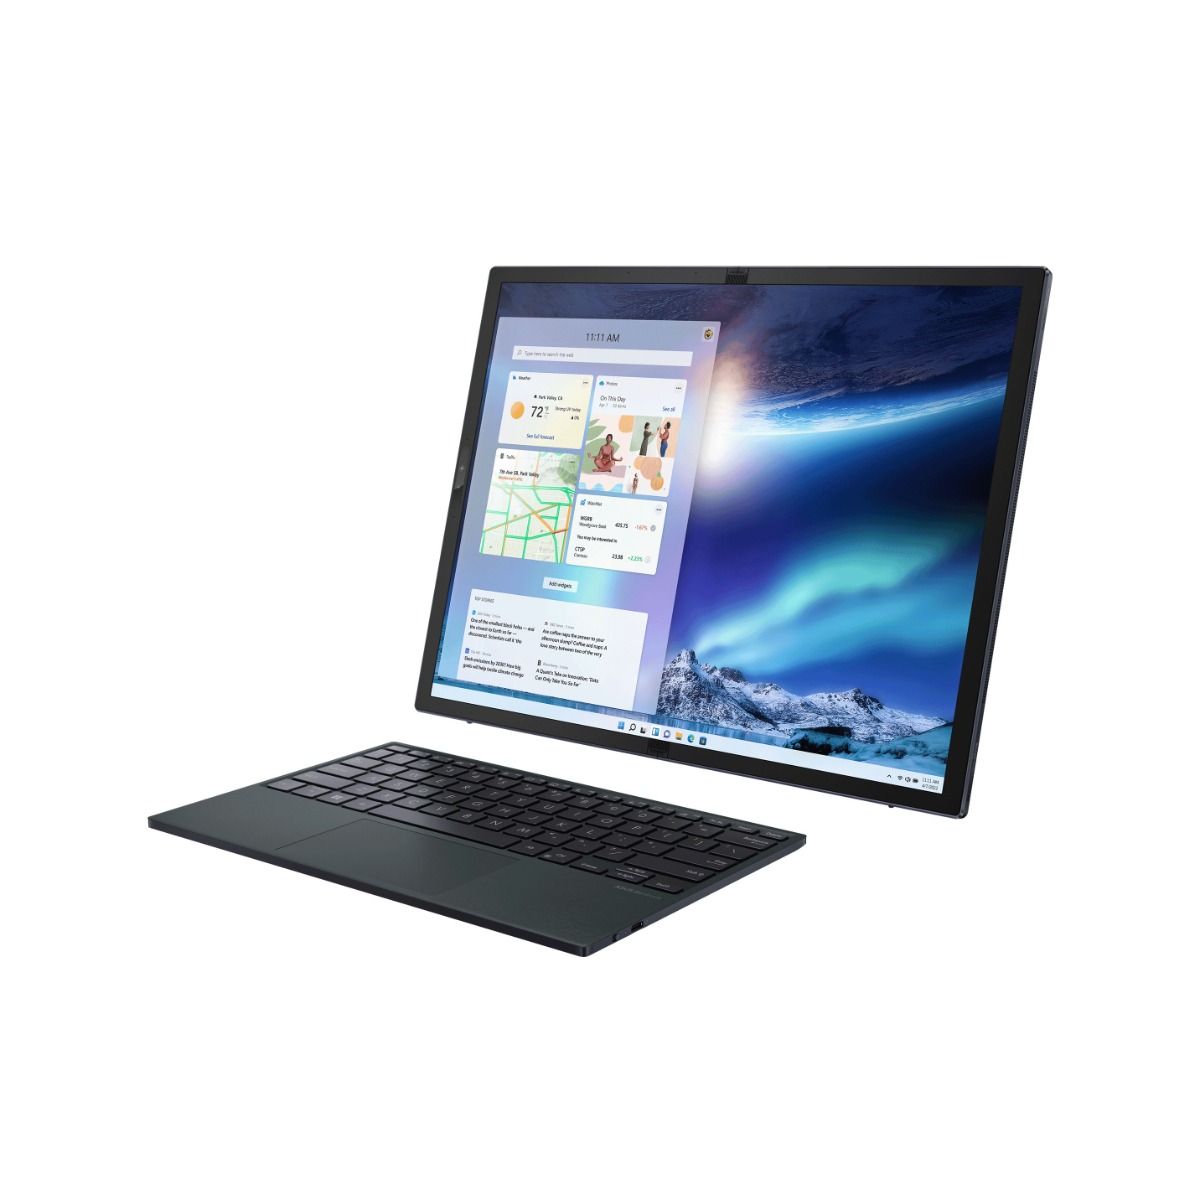 Asus Zenbook 17 Fold OLED Laptop Touch Intel i7 12th Gen 16GB RAM 1TB SSD Black